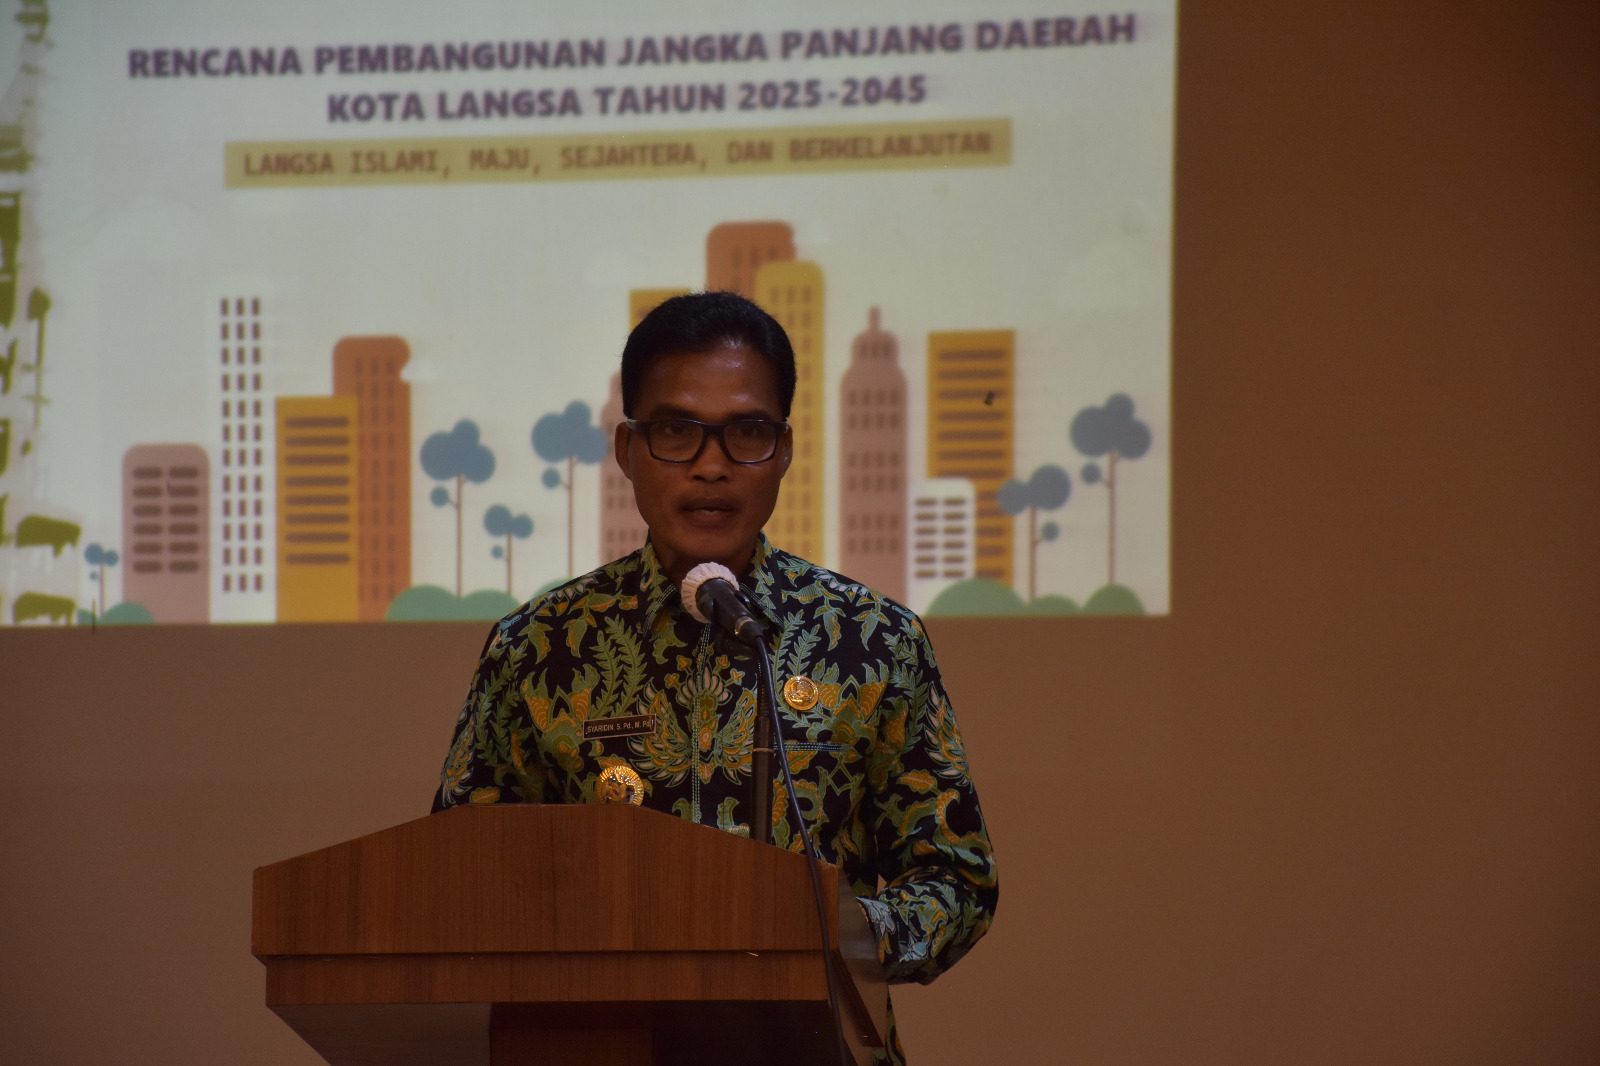 Keterangan foto: PJ Walikota Langsa Syaridin, S.Pd, M.Pd saat membuka acara Musrenbang RPJP kota Langsa tahun 2025-2045